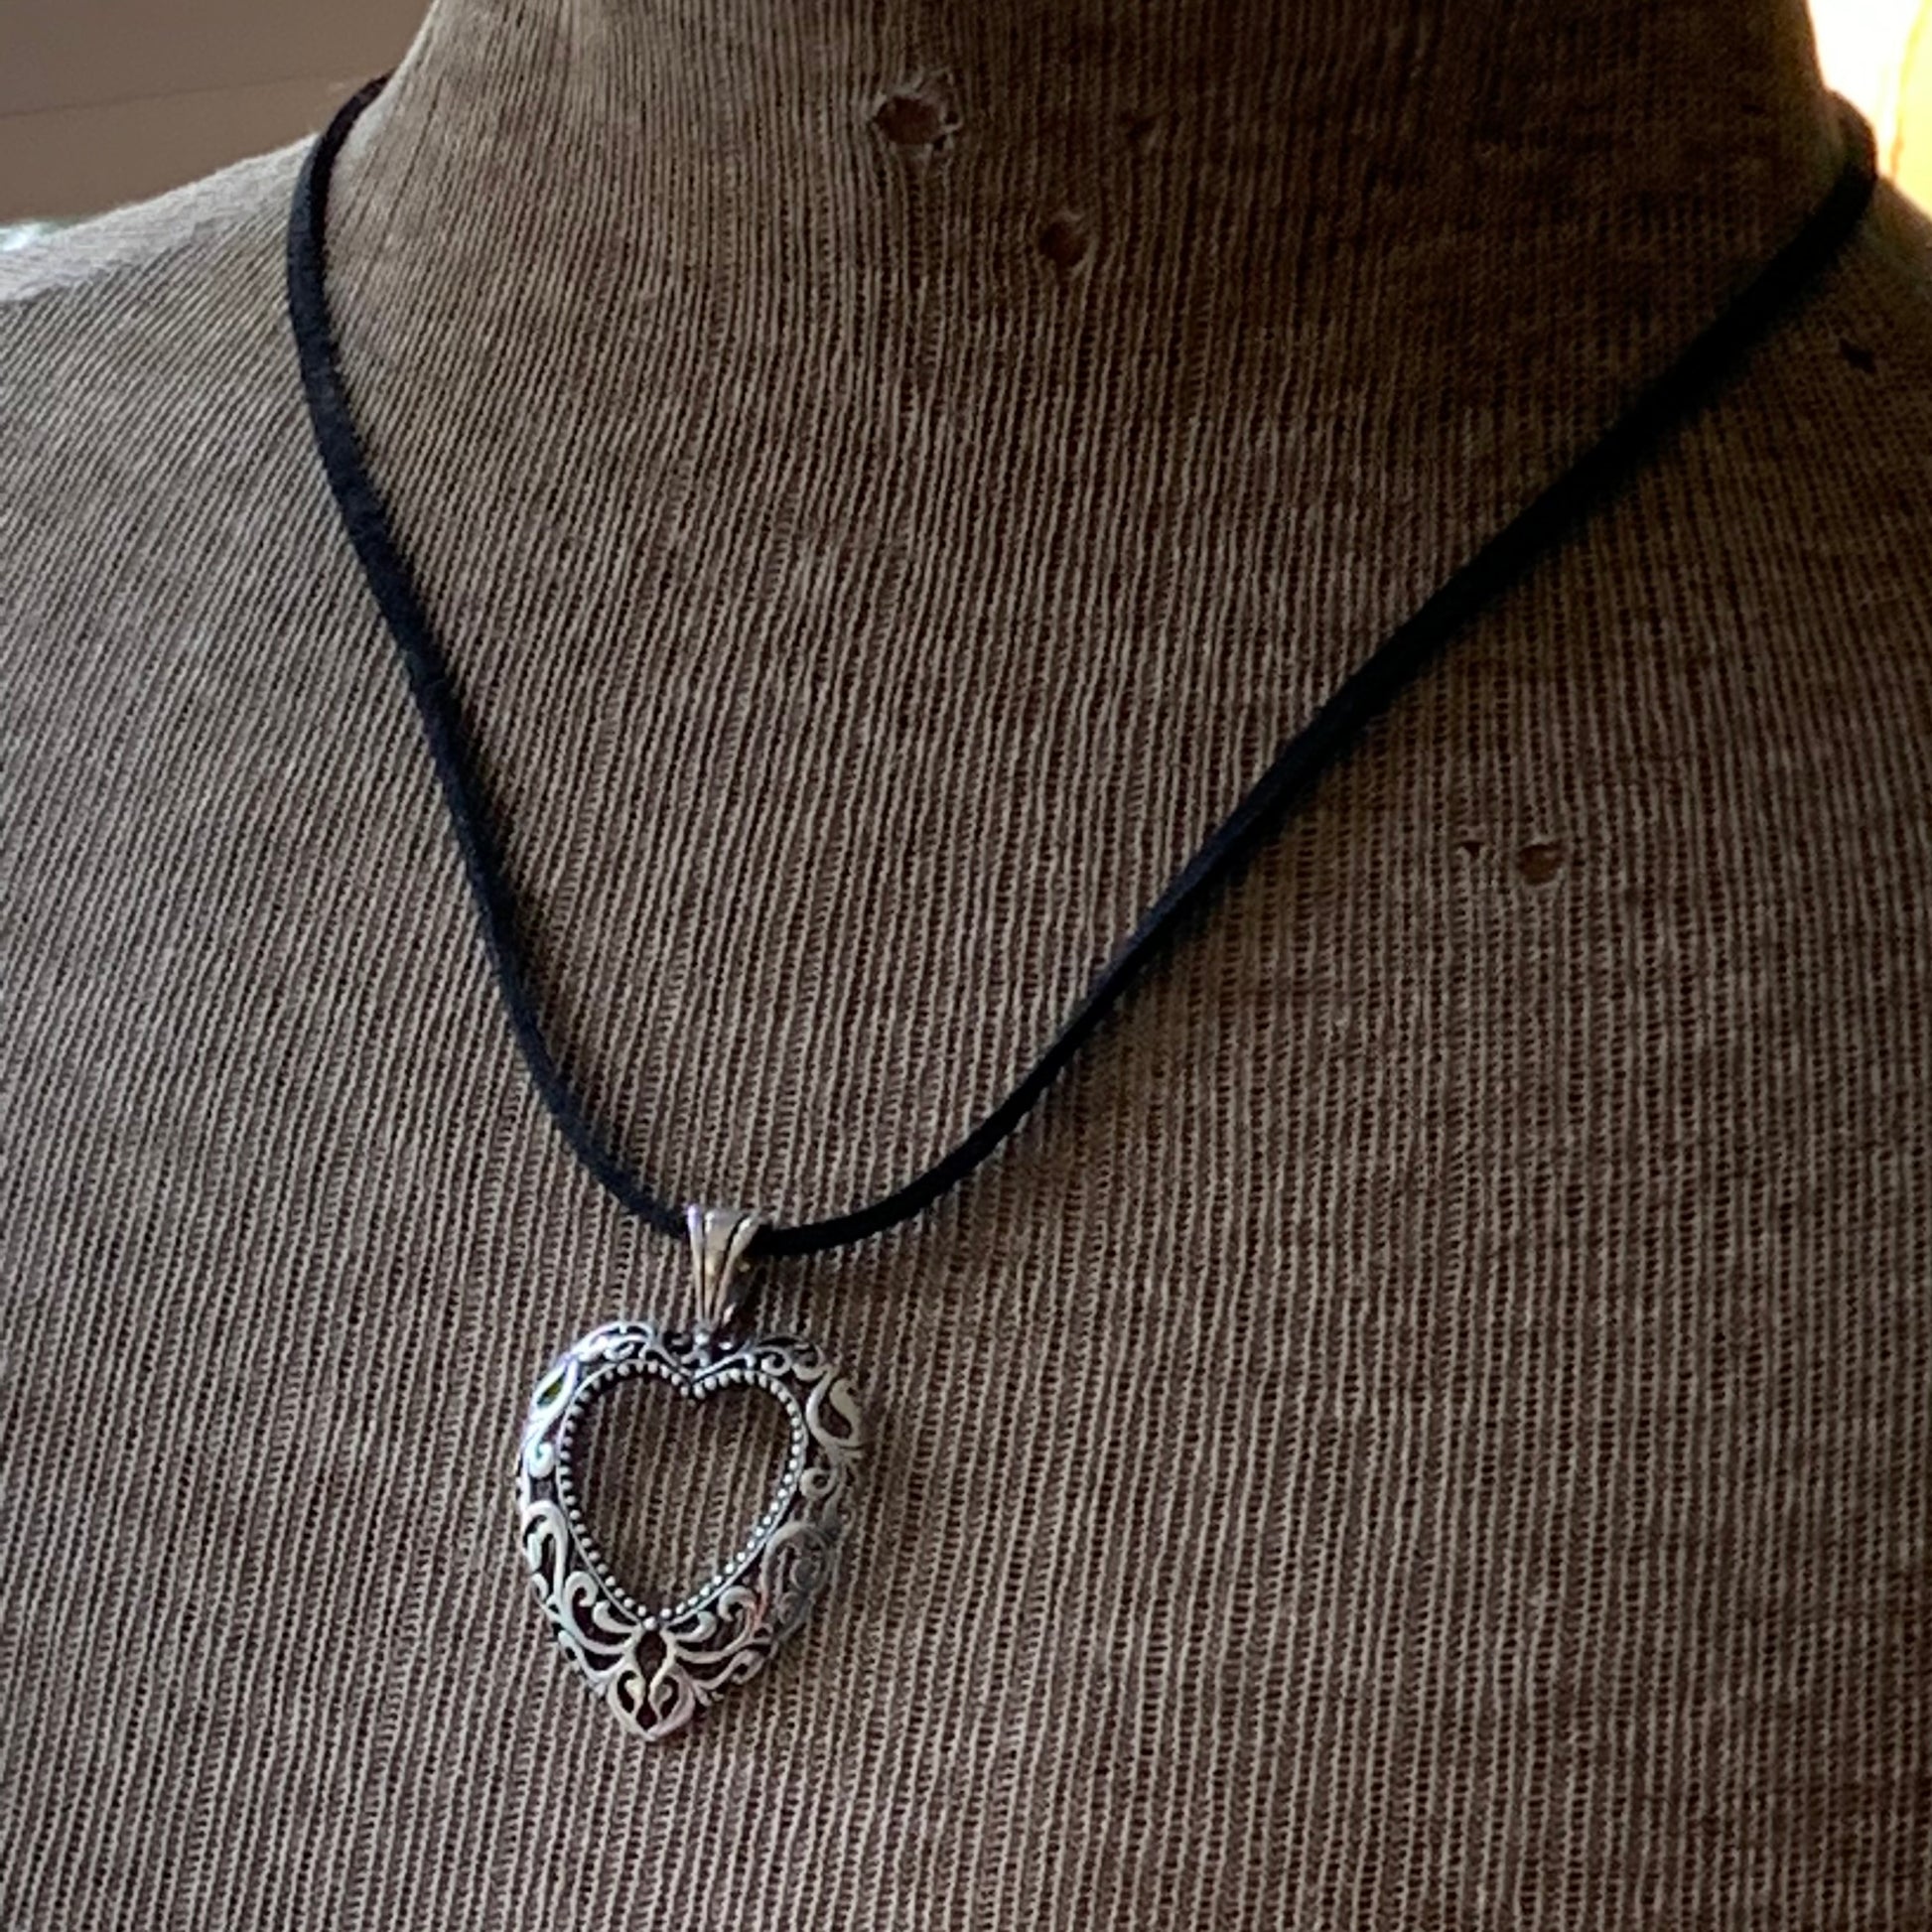 Vintage Sterling Silver Heart Pendant Necklace